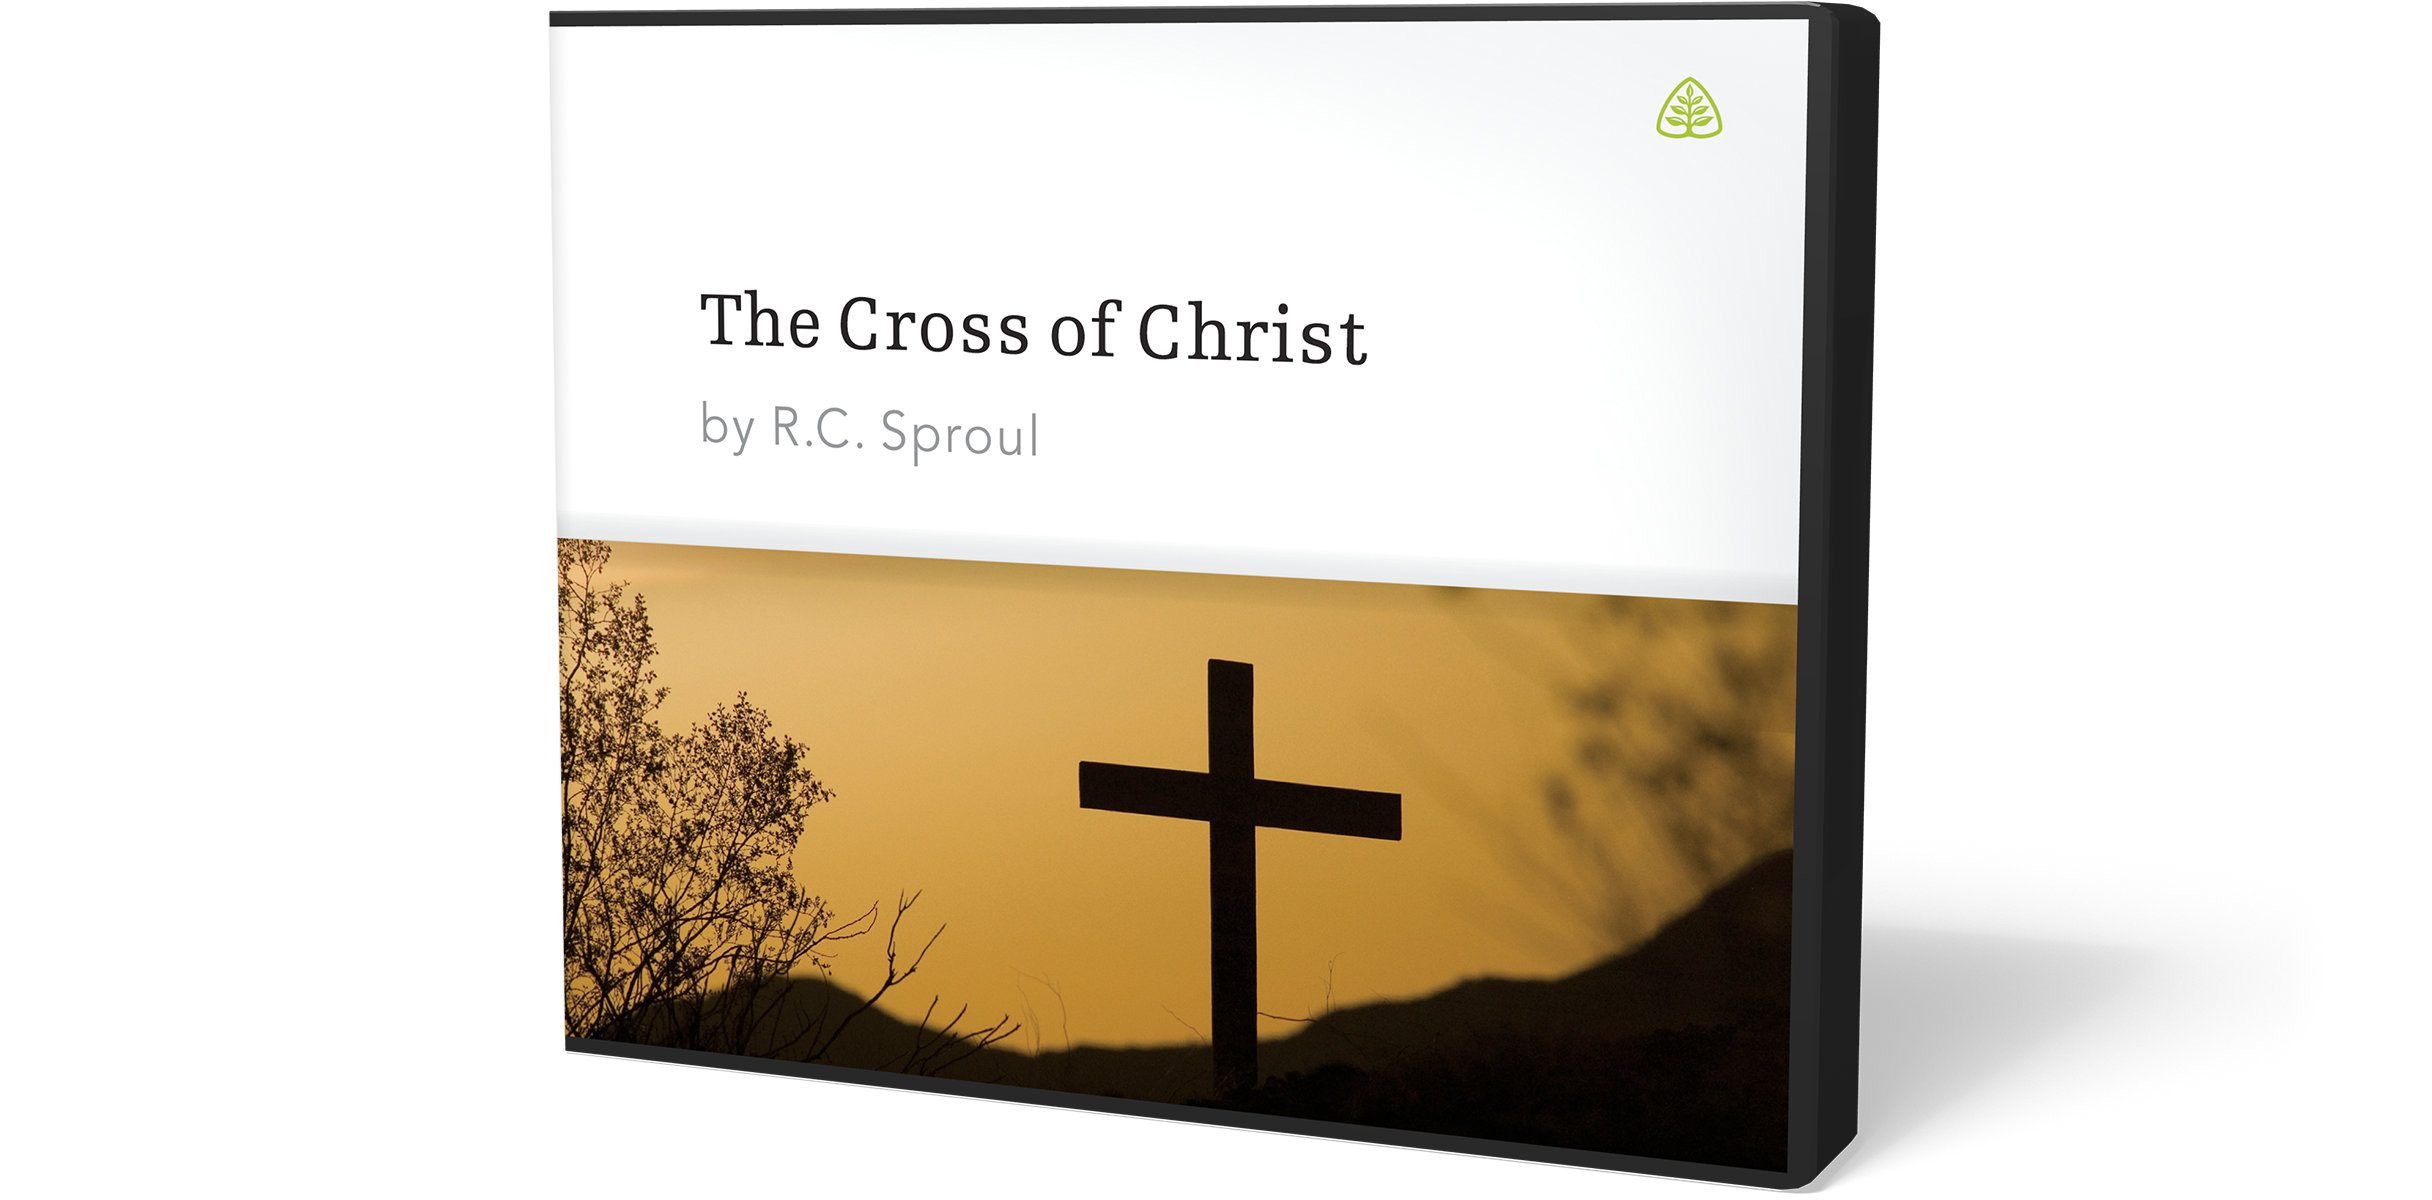 The Cross of Christ